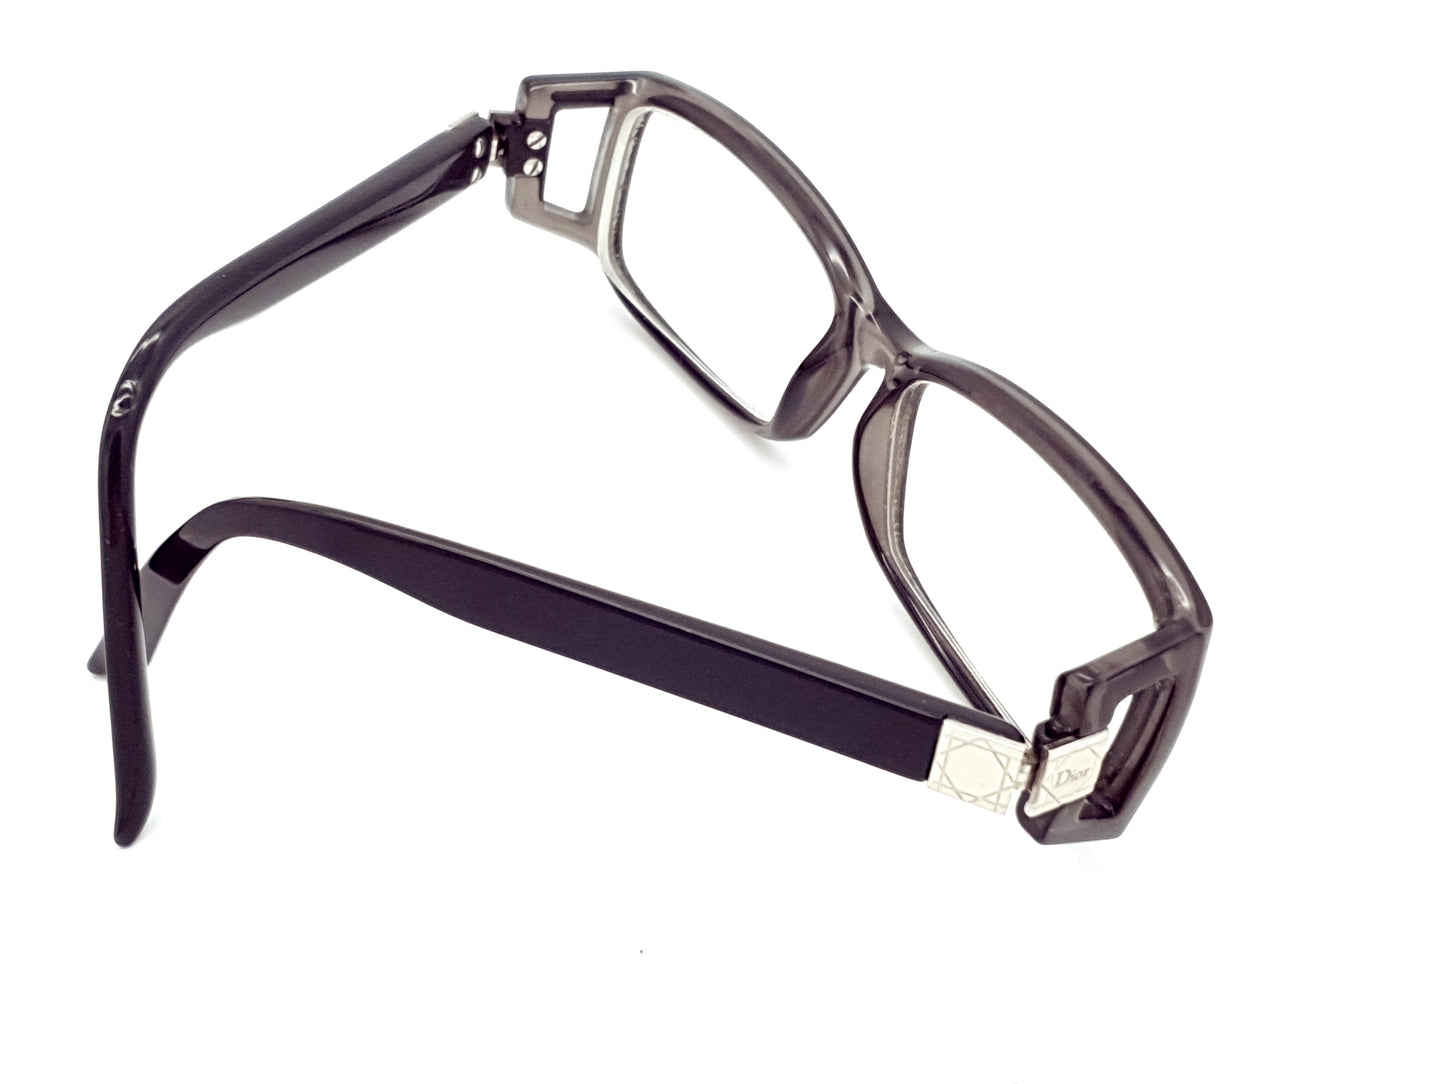 Dior glasses frame